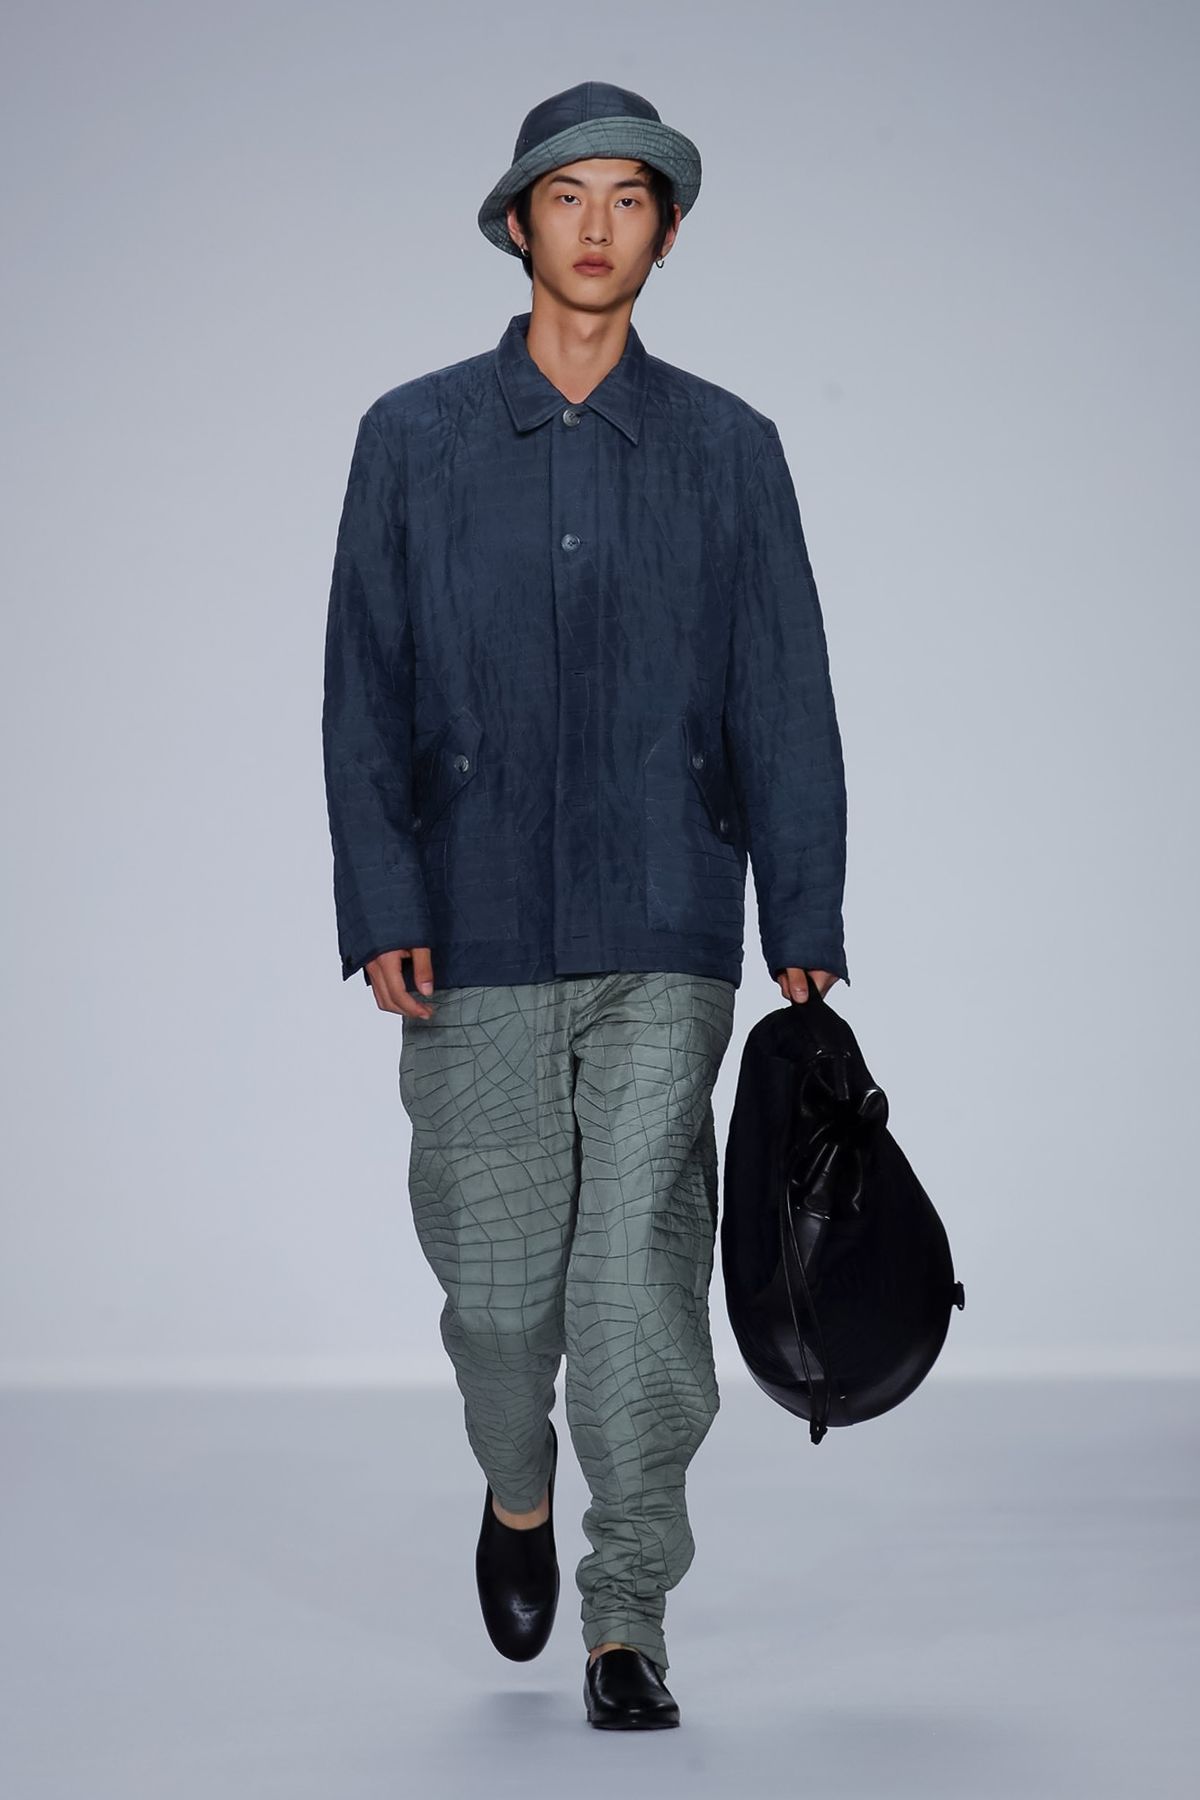 Paul Smith Menswear Spring/Summer 2020 Paris - Fashionably Male